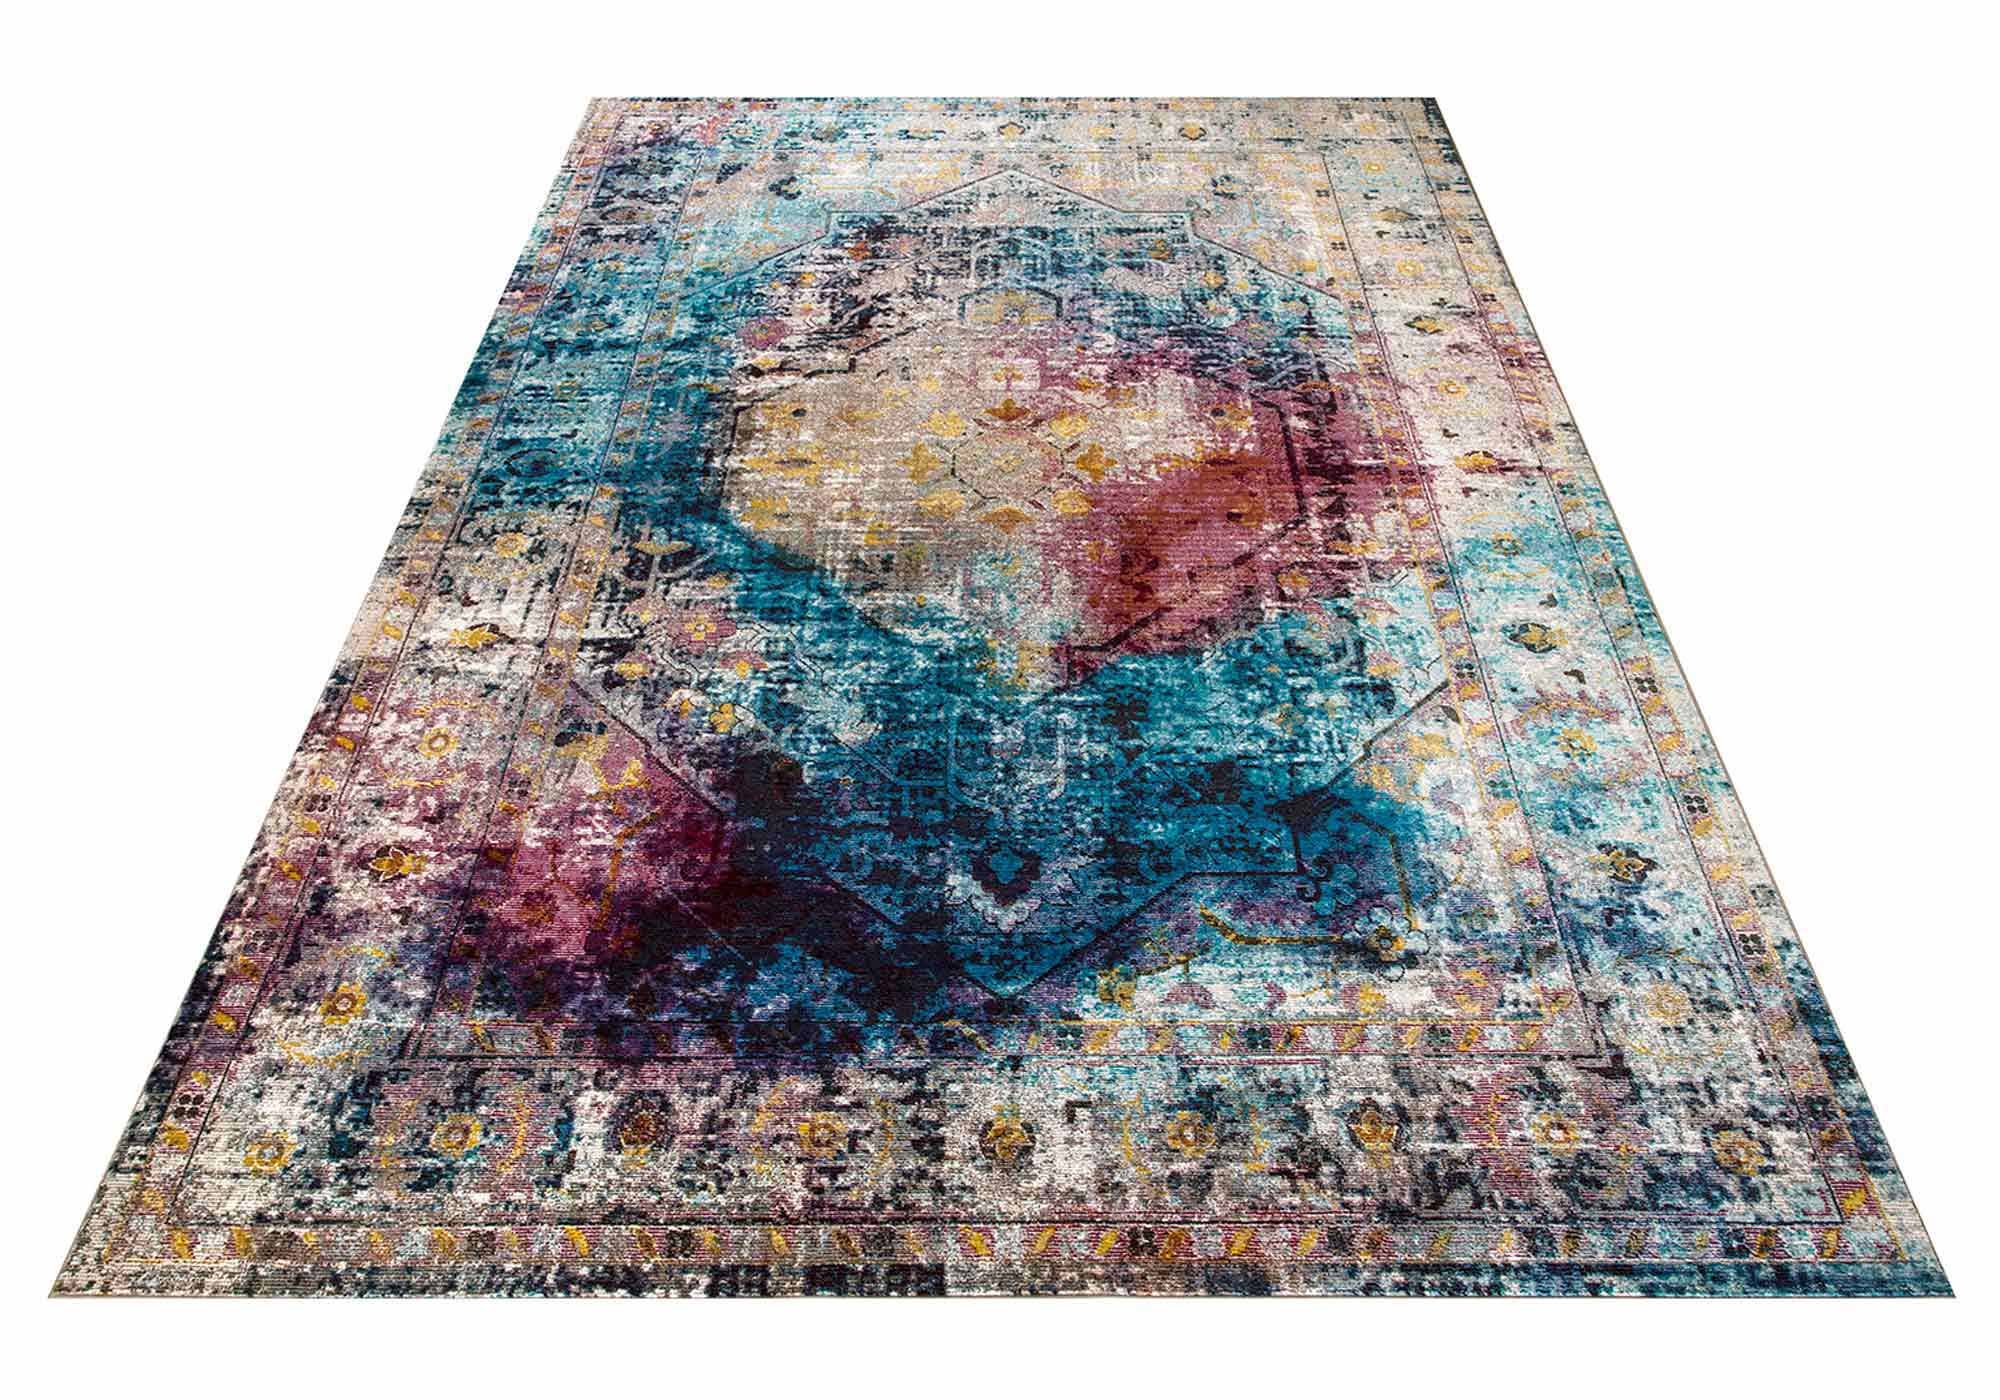 Festival Teppich 240 x 290 cm - mehrfarbig - 6 mm Höhe - Picasso 602